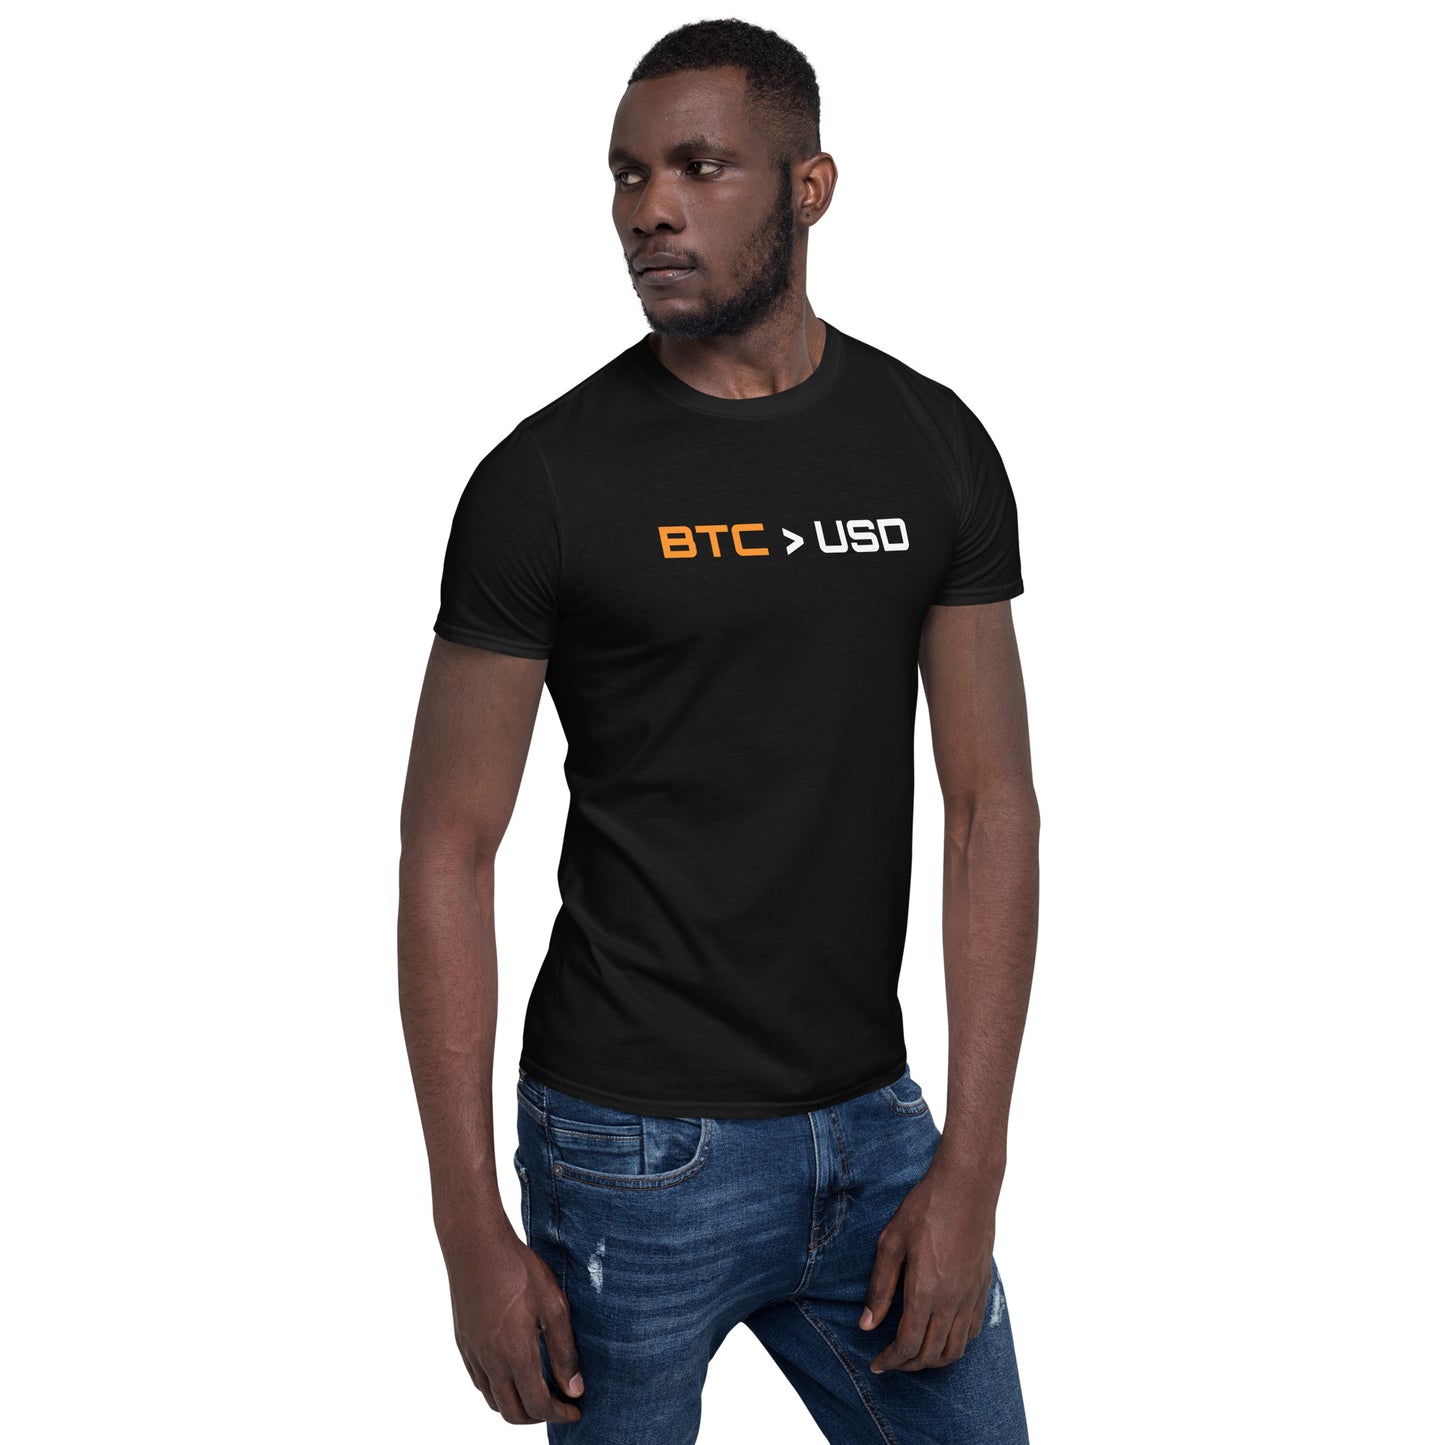 BTC > USD Unisex T-Shirt